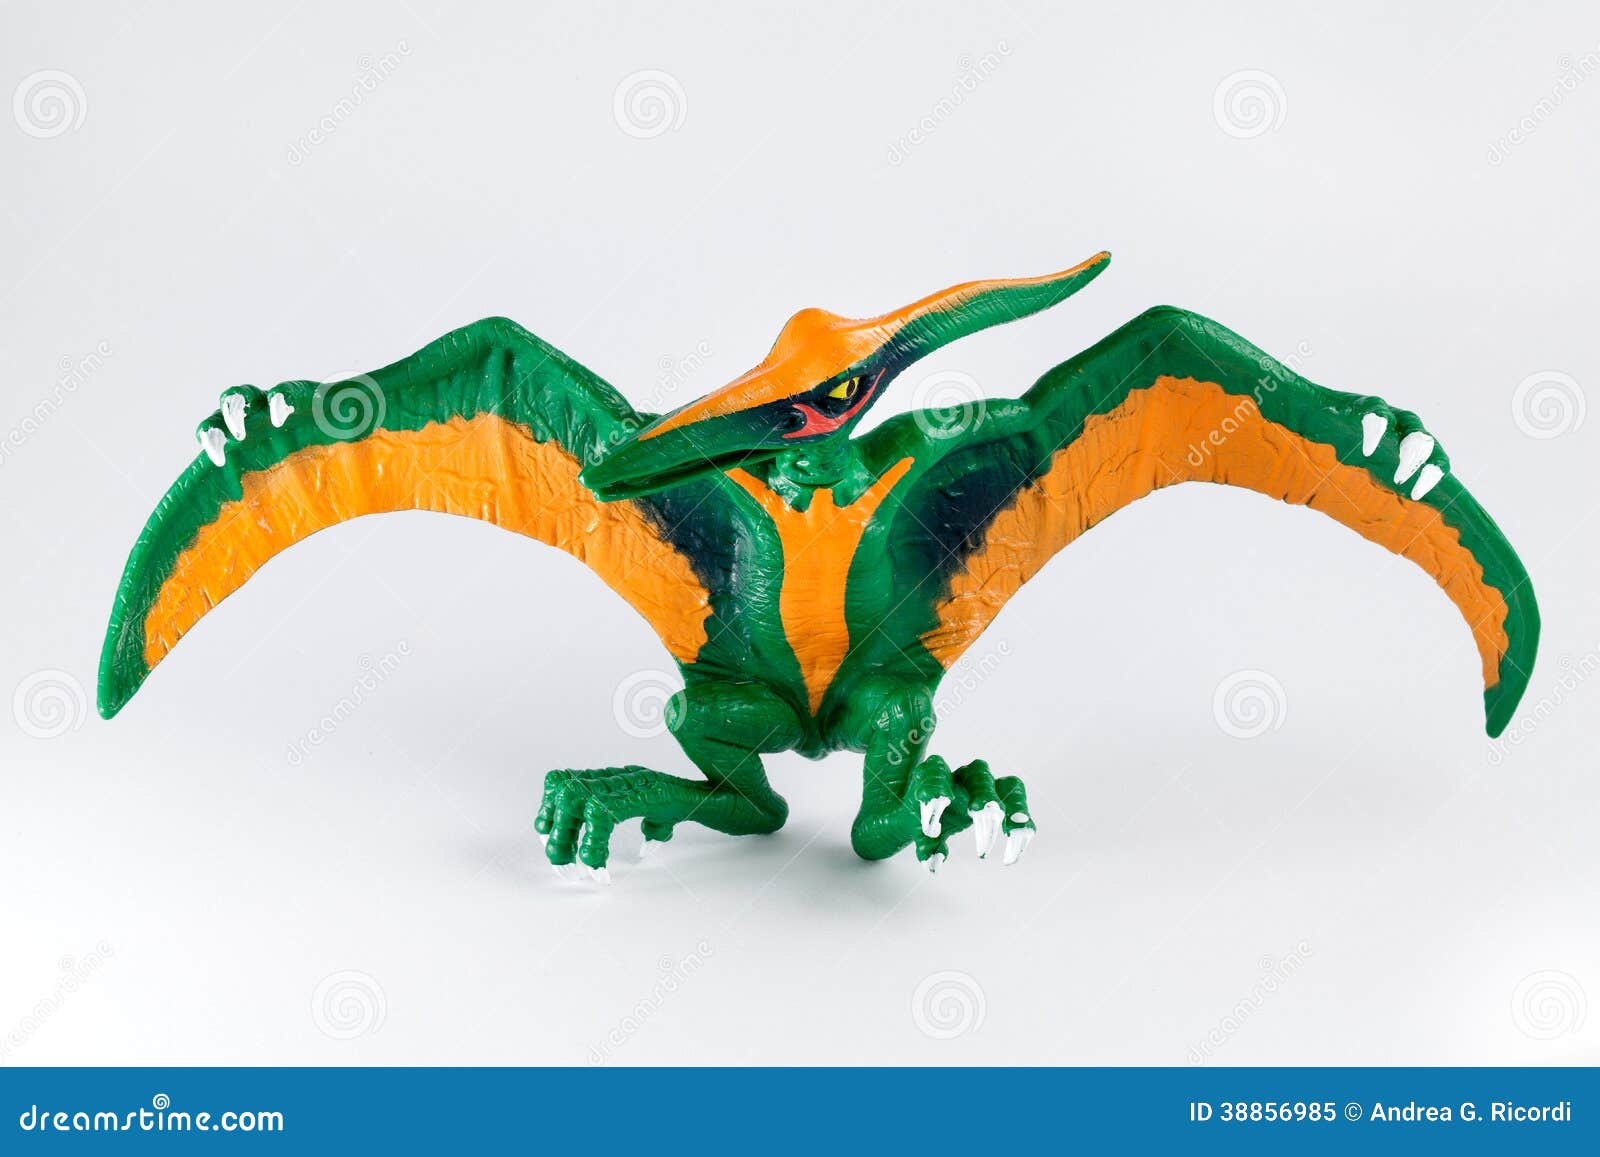 narutosak Realistic Pterodactyl Dinosaur Action Figurine Model Desktop Decor Kids Toy Gift Christmas Birthday Gift for Children